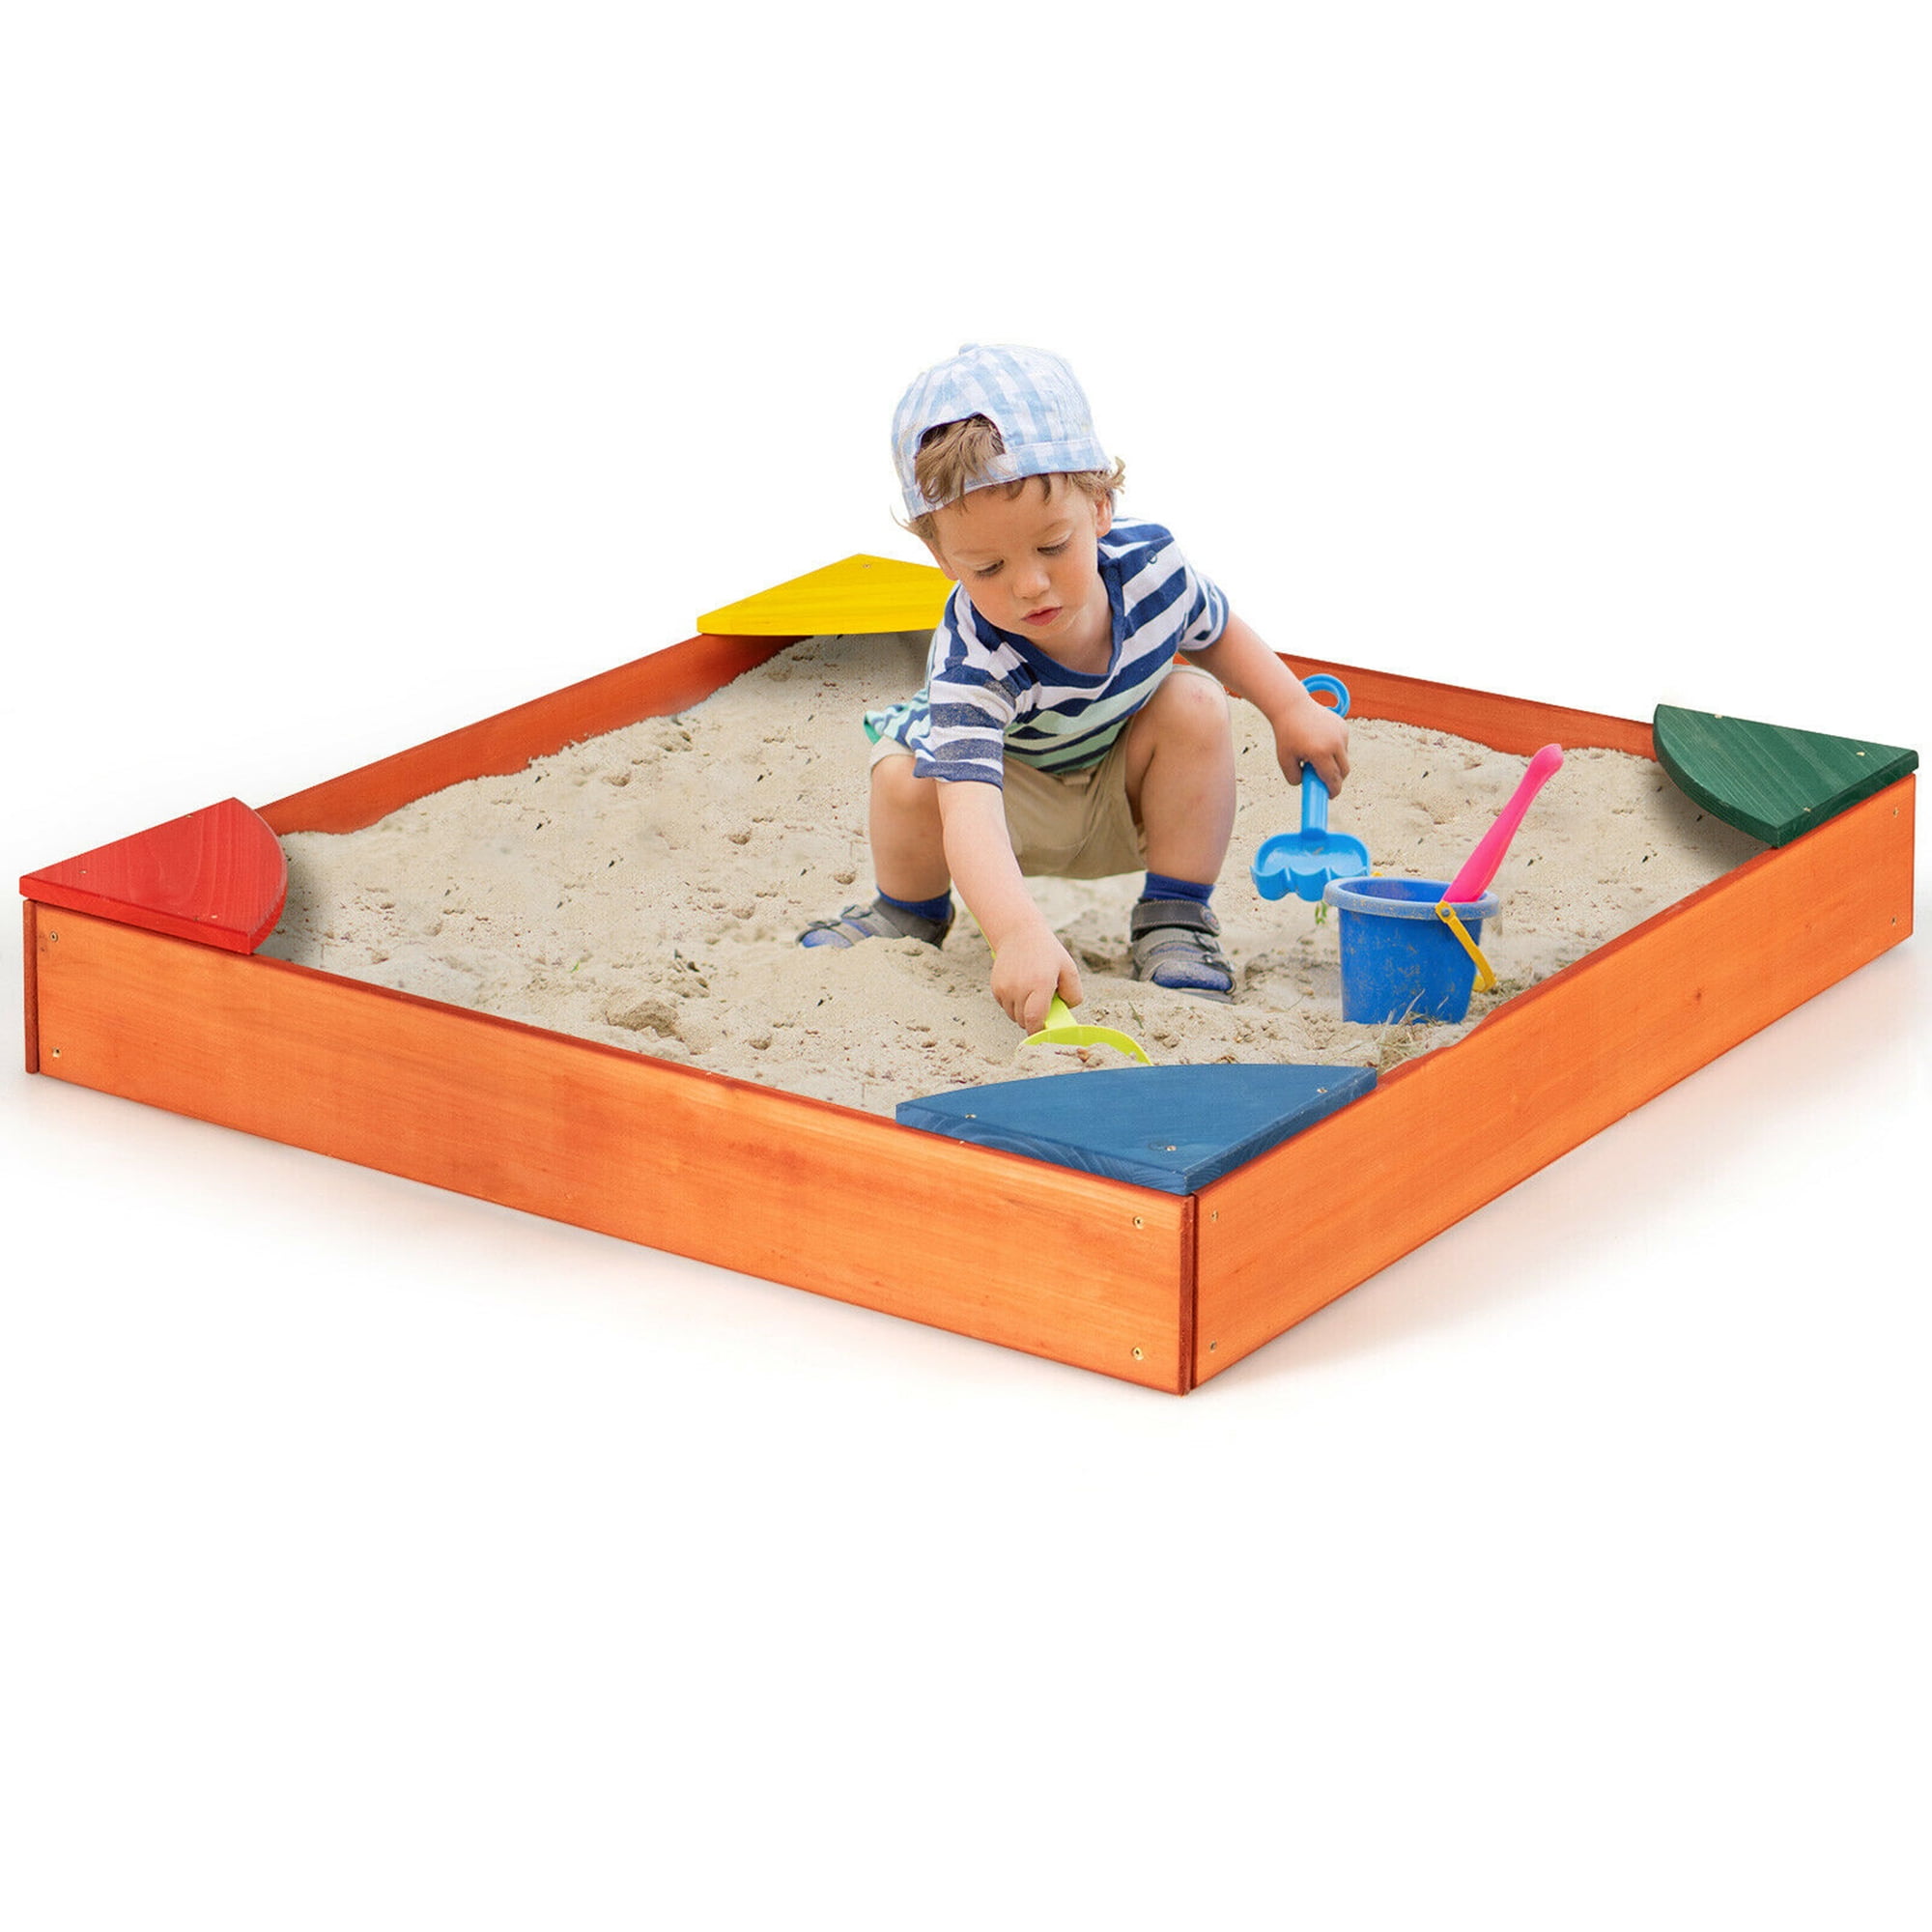 Details about   Kids  Fir Wood Cedar Sandbox Storage Seat Children Outdoor Playset Backyard Gift 